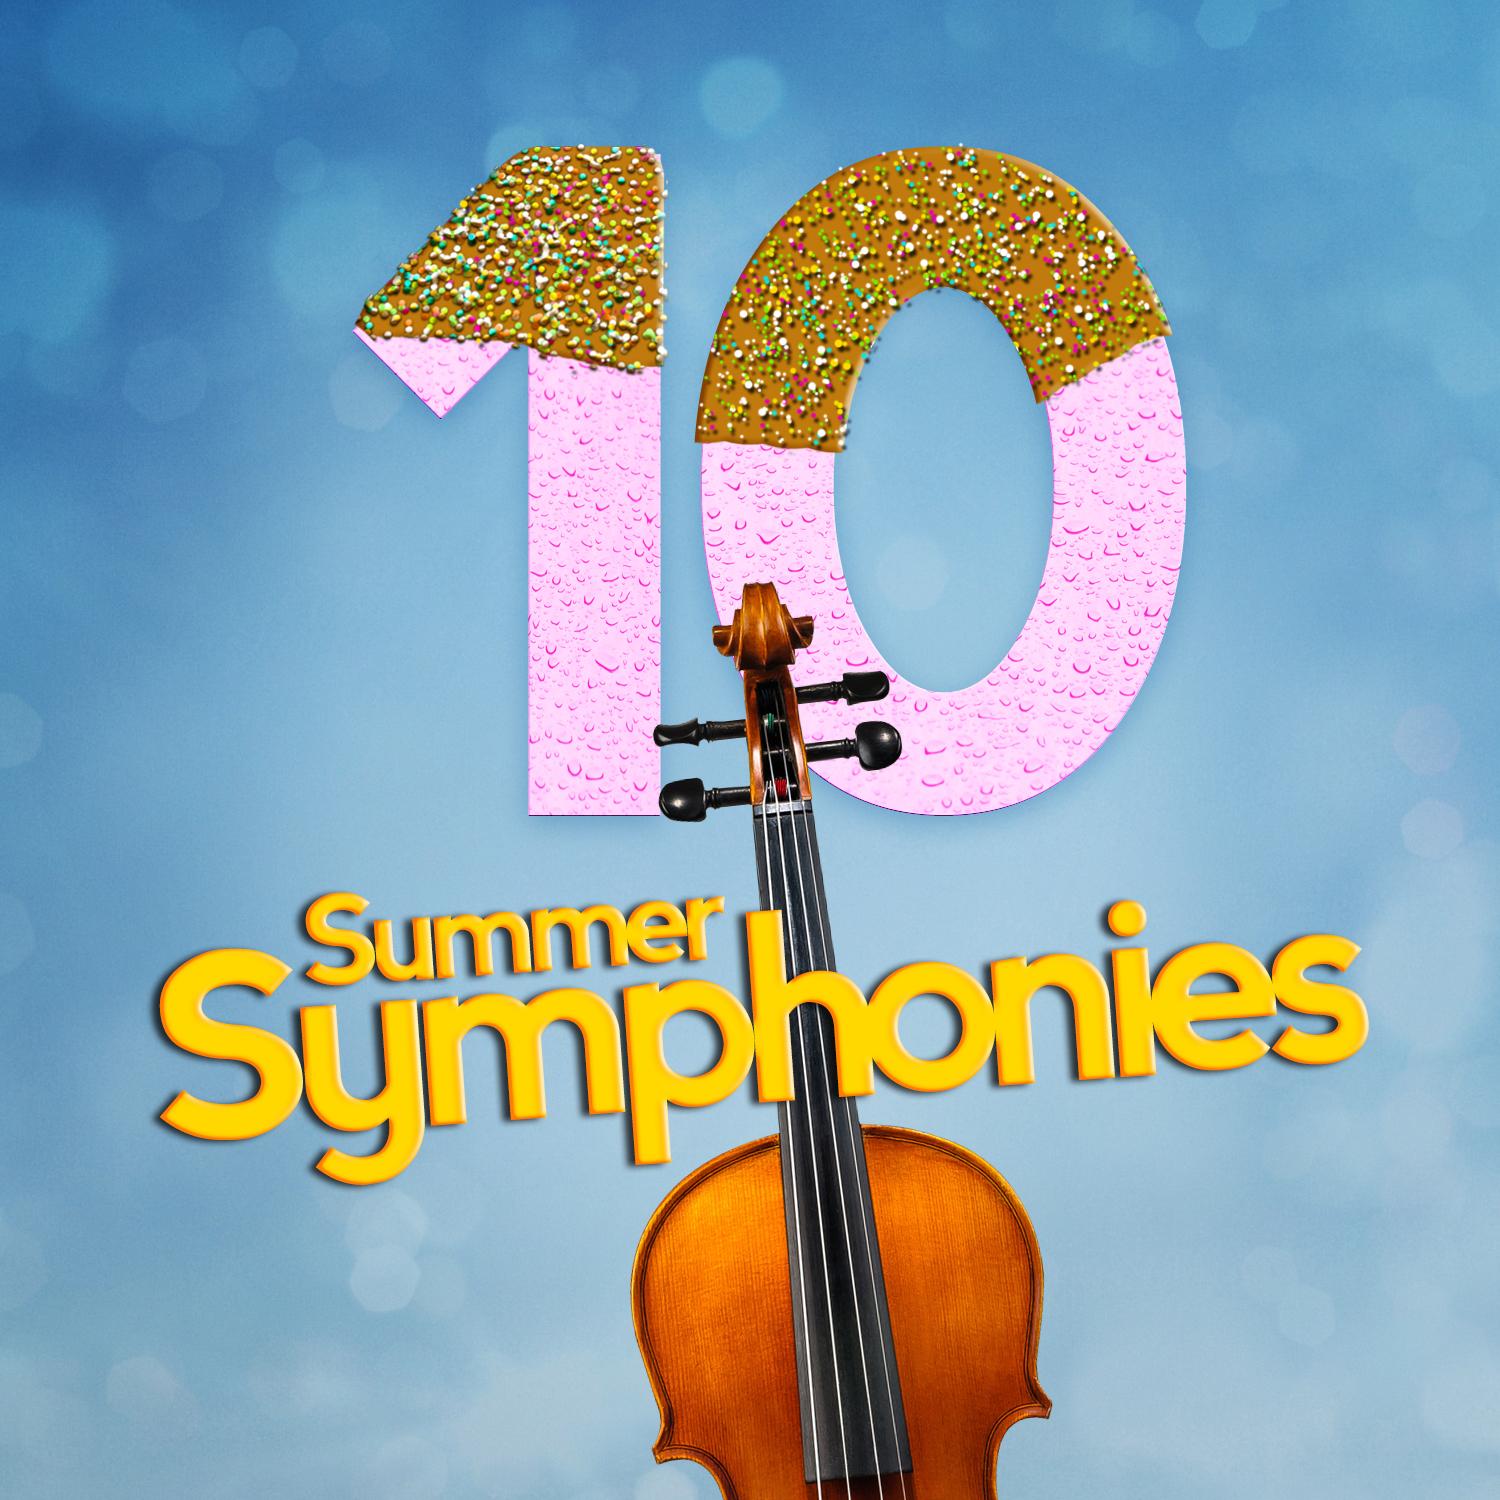 10 Summer Symphonies